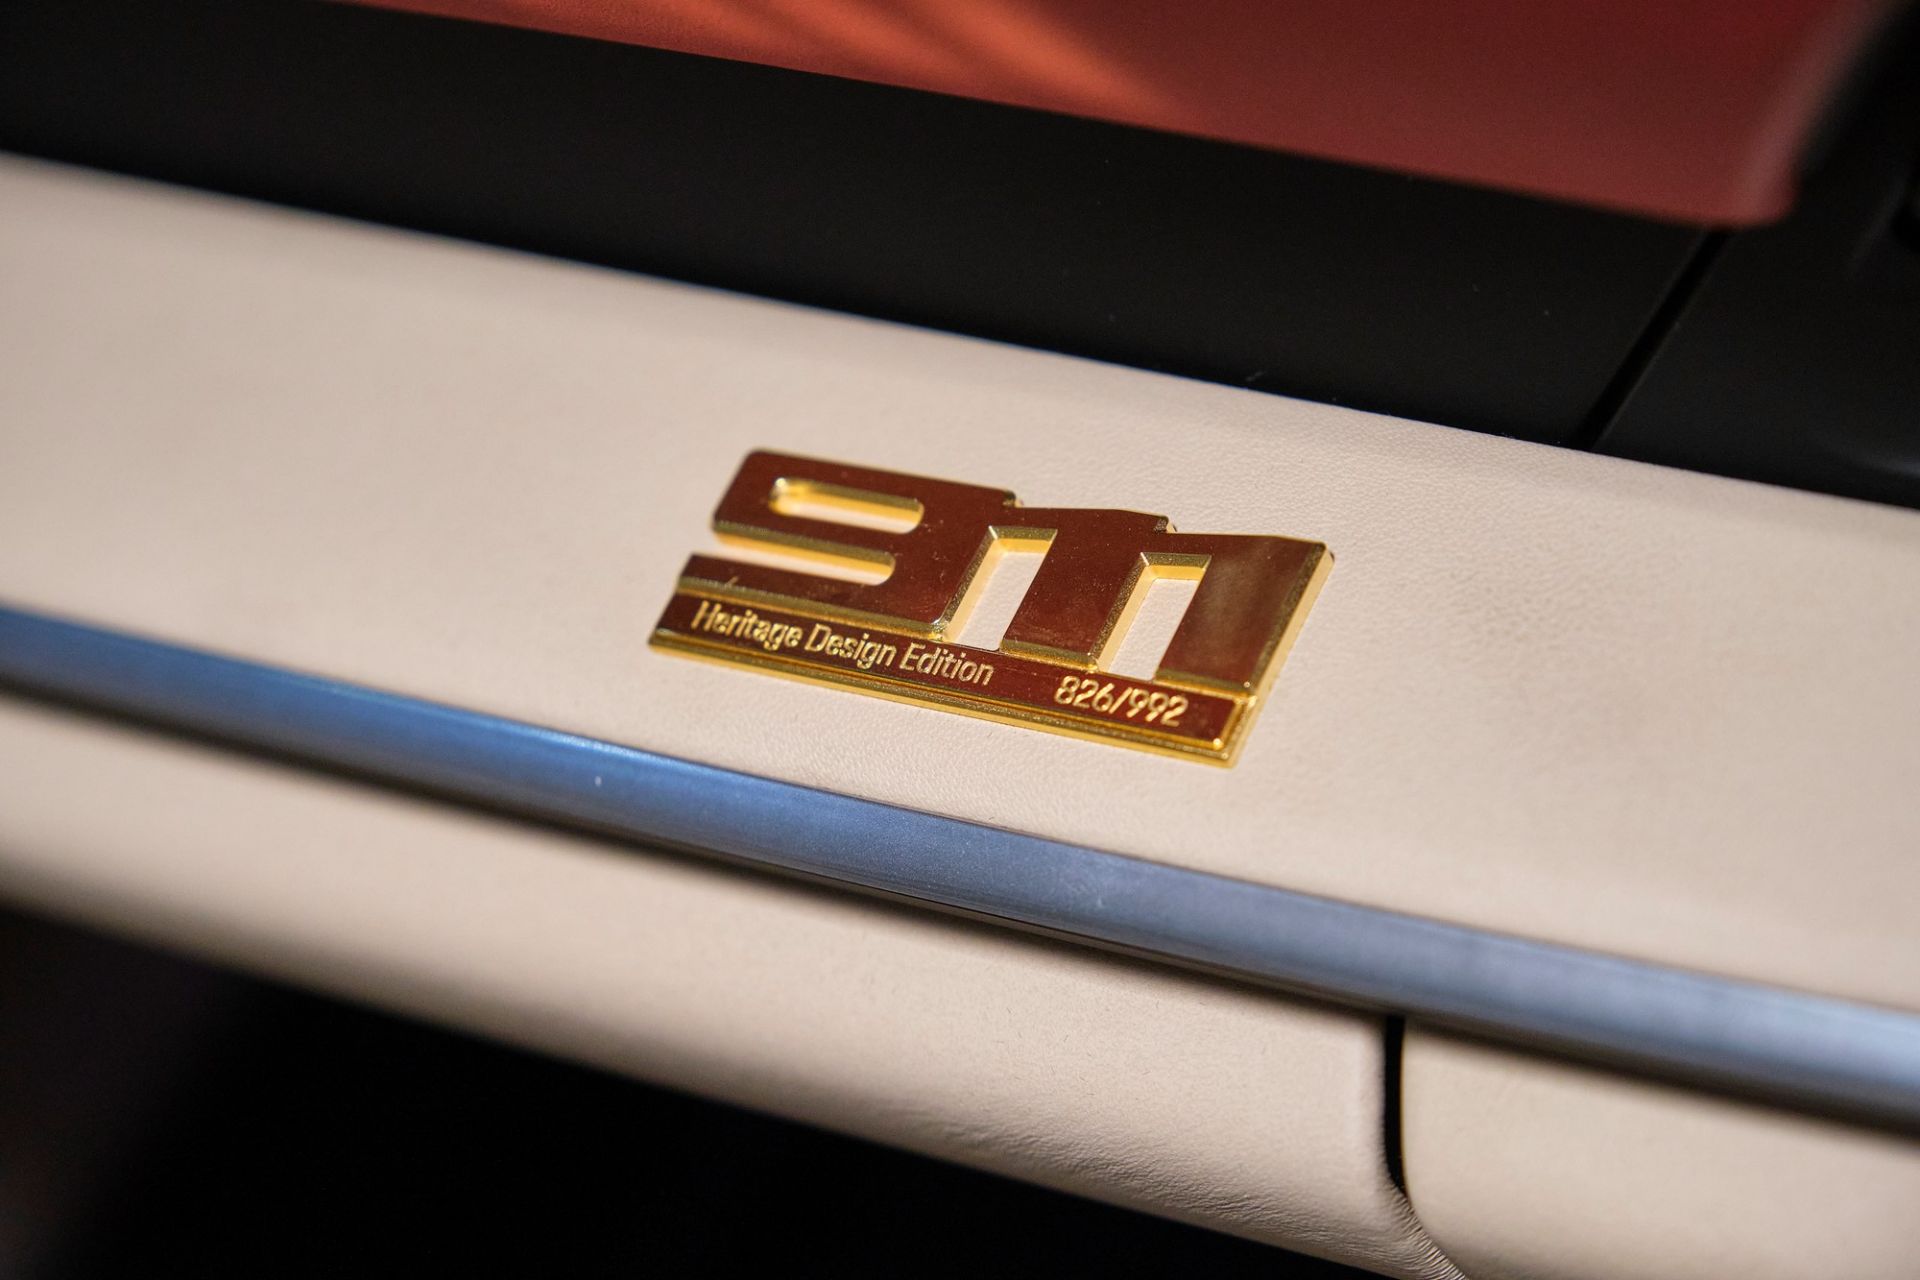 2021 Porsche 911 Targa 4S Heritage Design Edition (Porsche) - Image 12 of 23